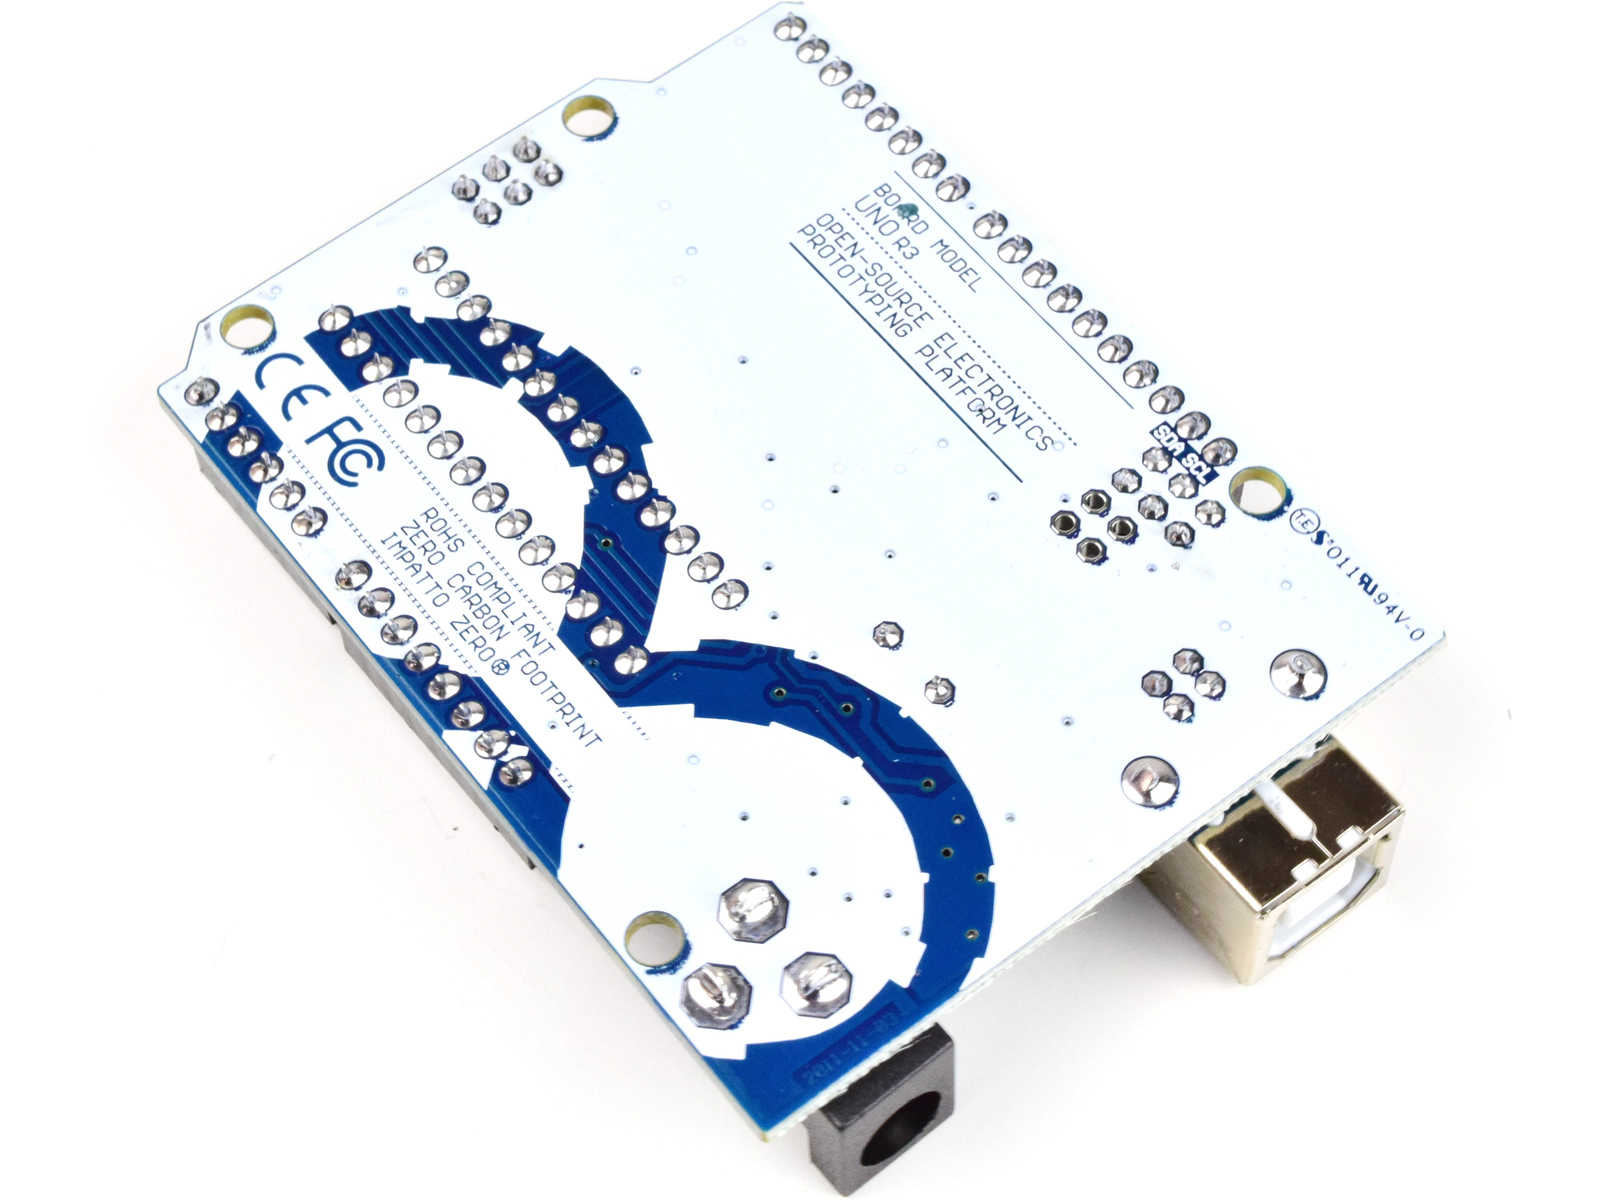 UNO R3 module Atmega328P + Atmega16u2 USB (100% compatible with Arduino) 7